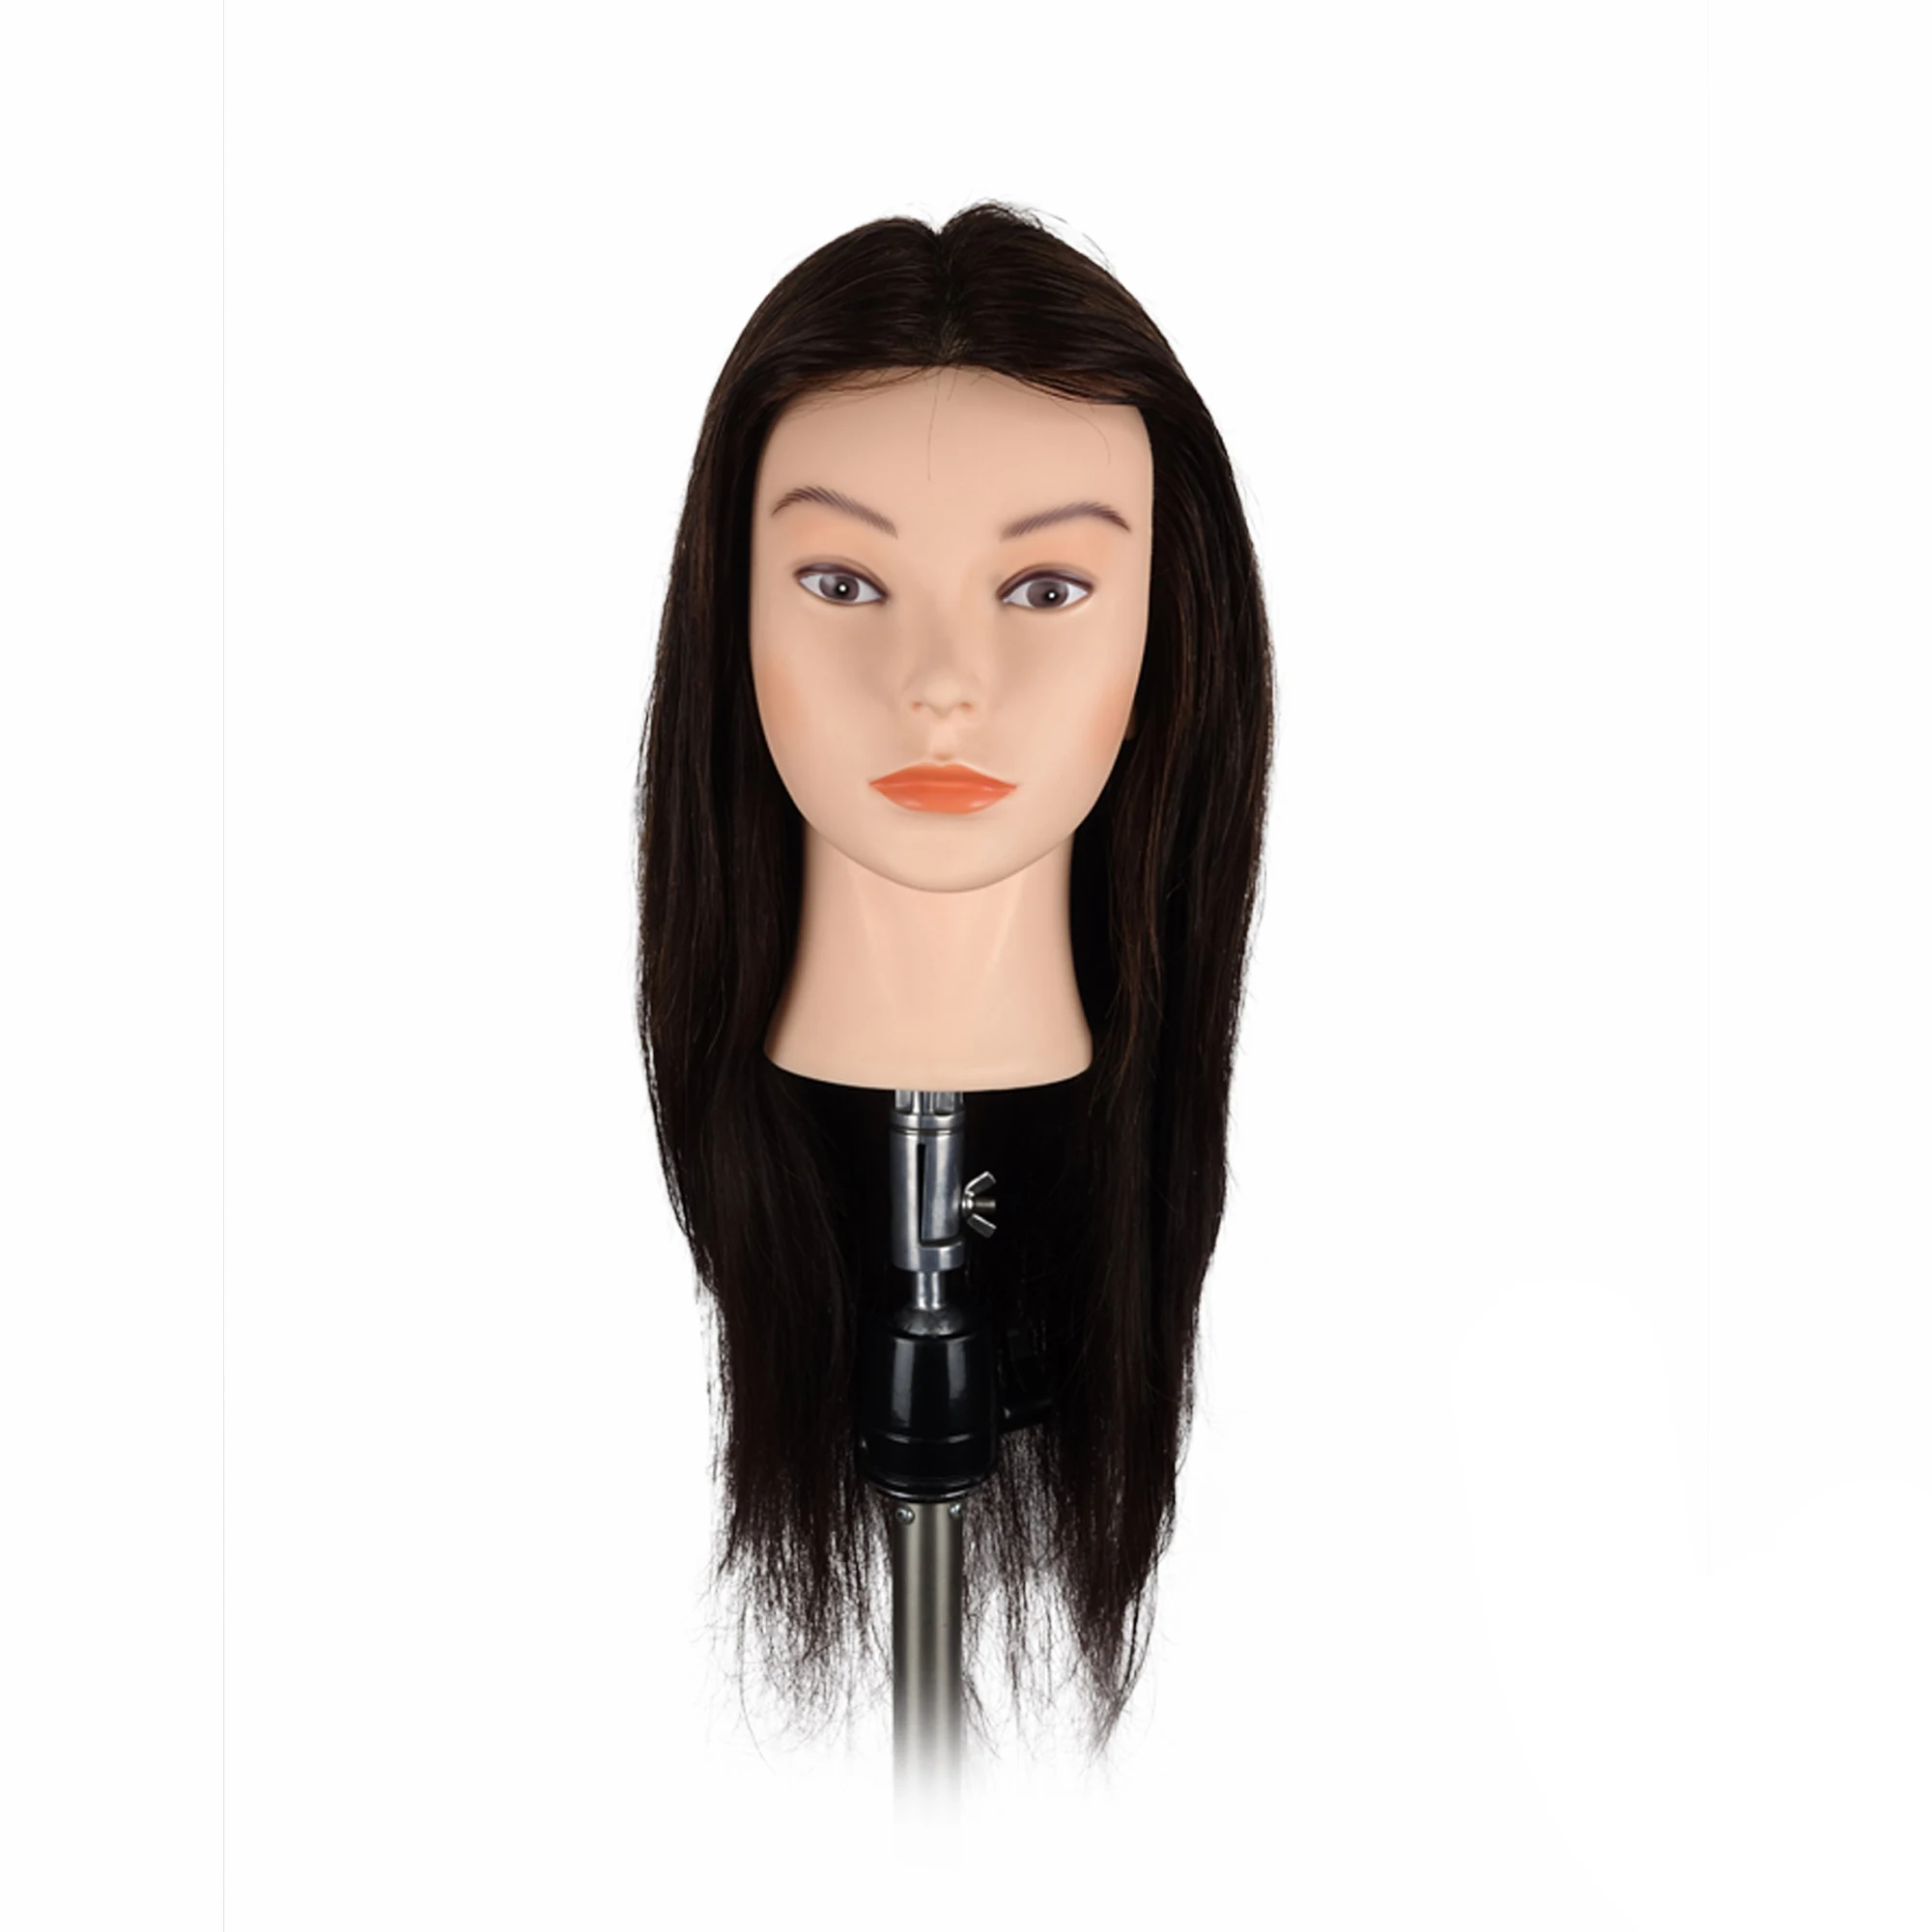 Mannequin-Head with 45CM Mixed Hair Dark Brown Training Head Salon Female Mannequin Training Doll Head Wig Head